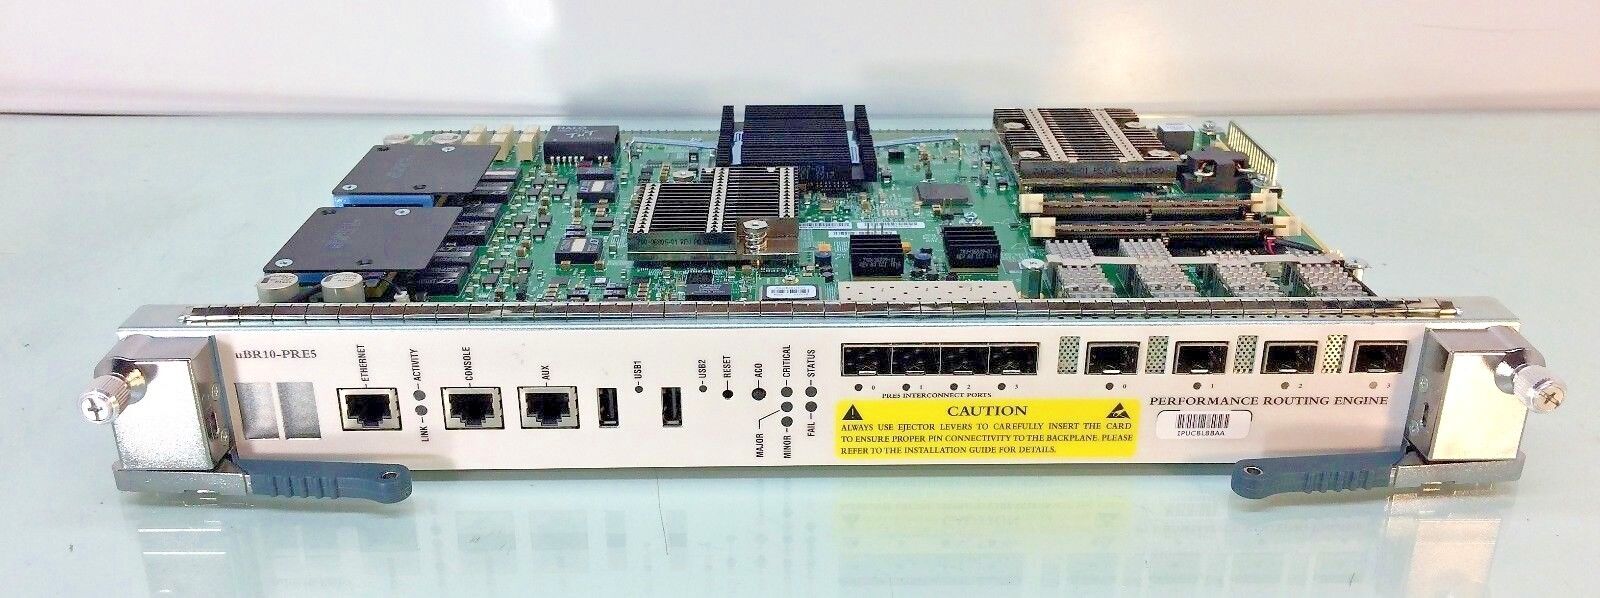 Cisco UBR10-PRE5 UBR10-PRE5-30G UBR10012 Performance Router Engine 5 3x10G lics